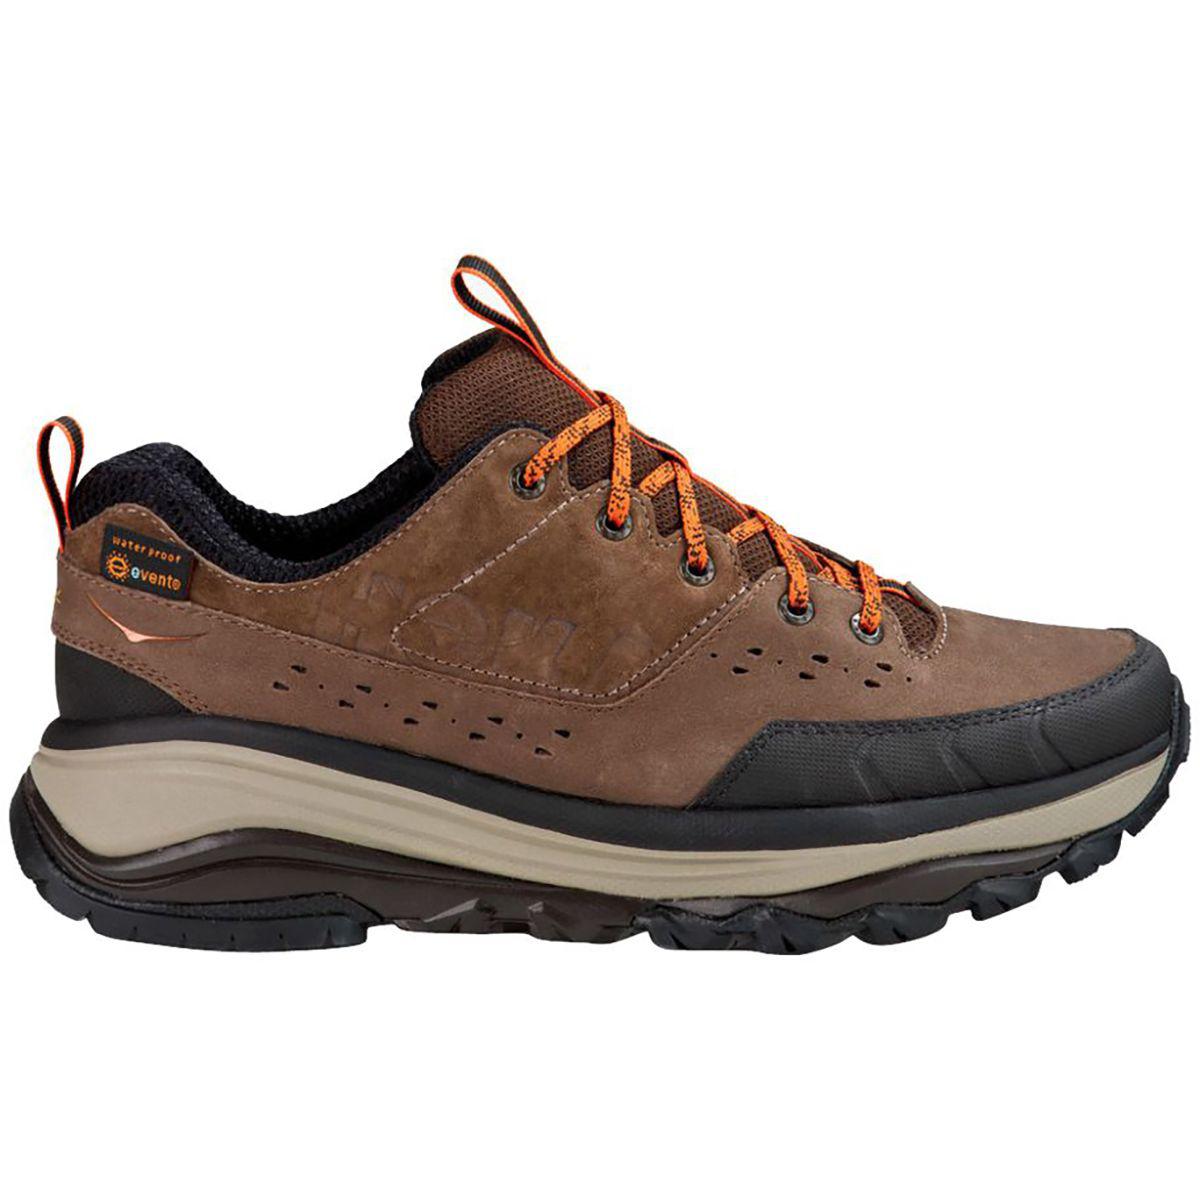 Lyst - Hoka One One Tor Summit Wp Hiking Shoe in Brown for Men